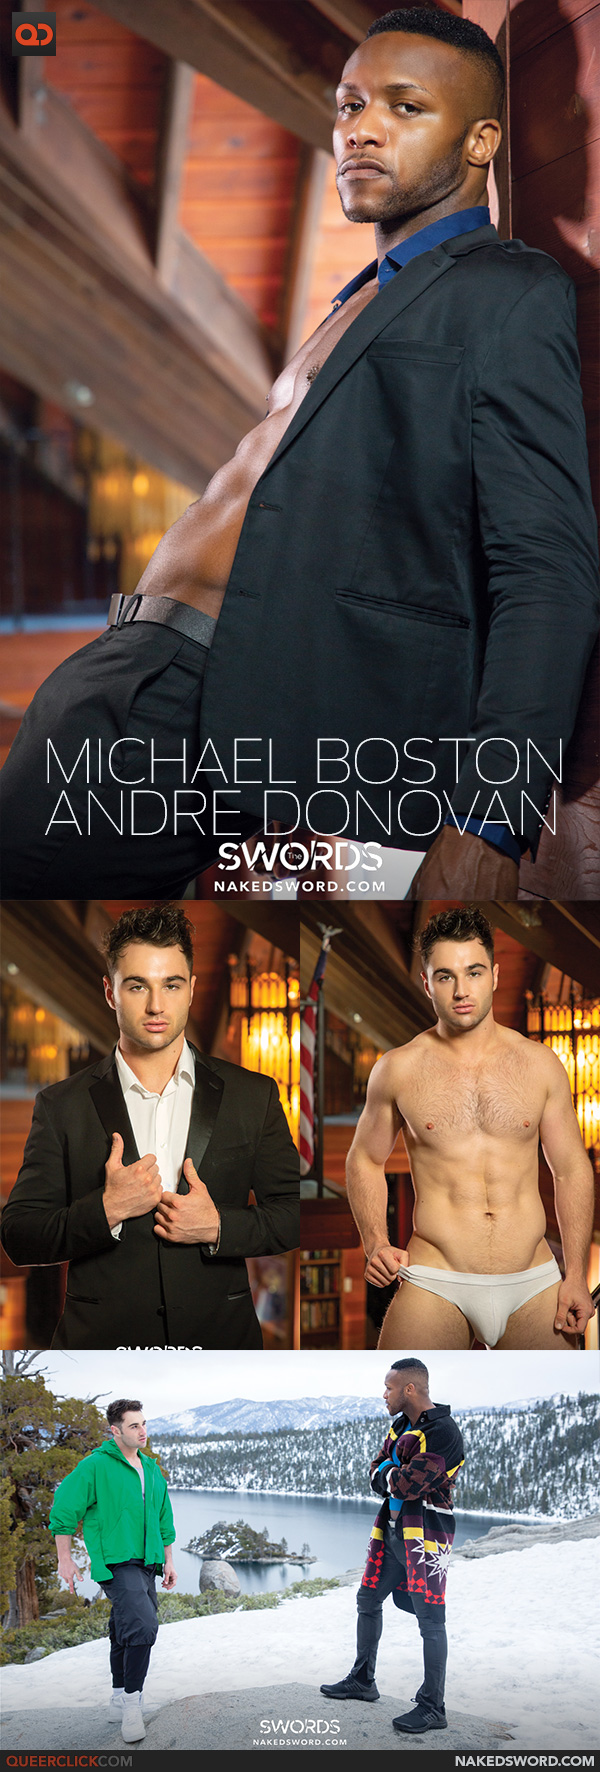 Naked Sword: Andre Donovan and Michael Boston - The Swords Scene 4